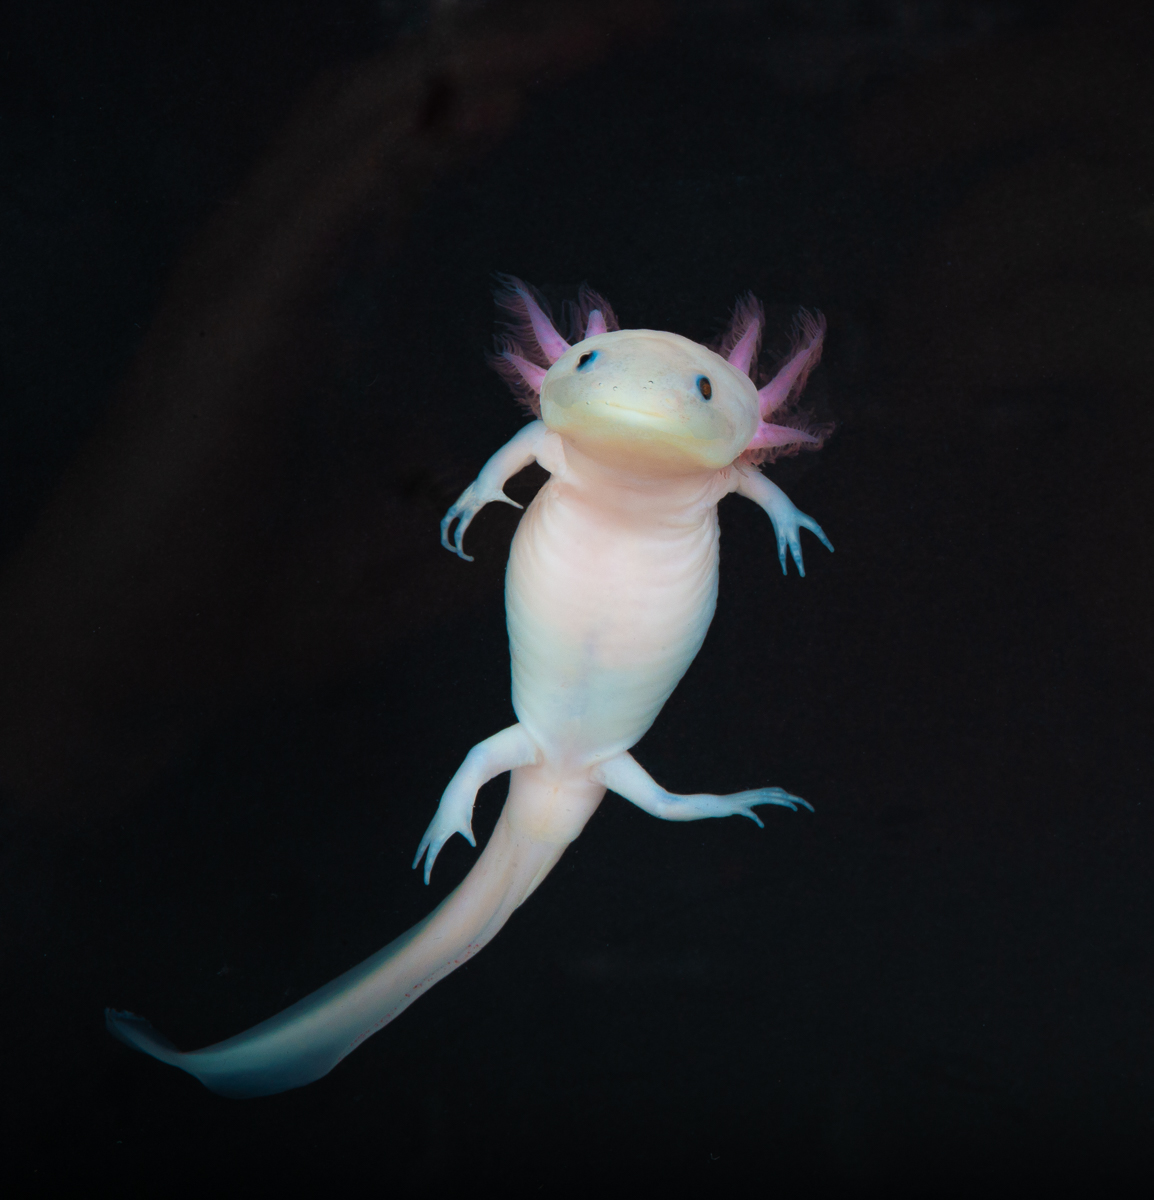 Axolotl image 1